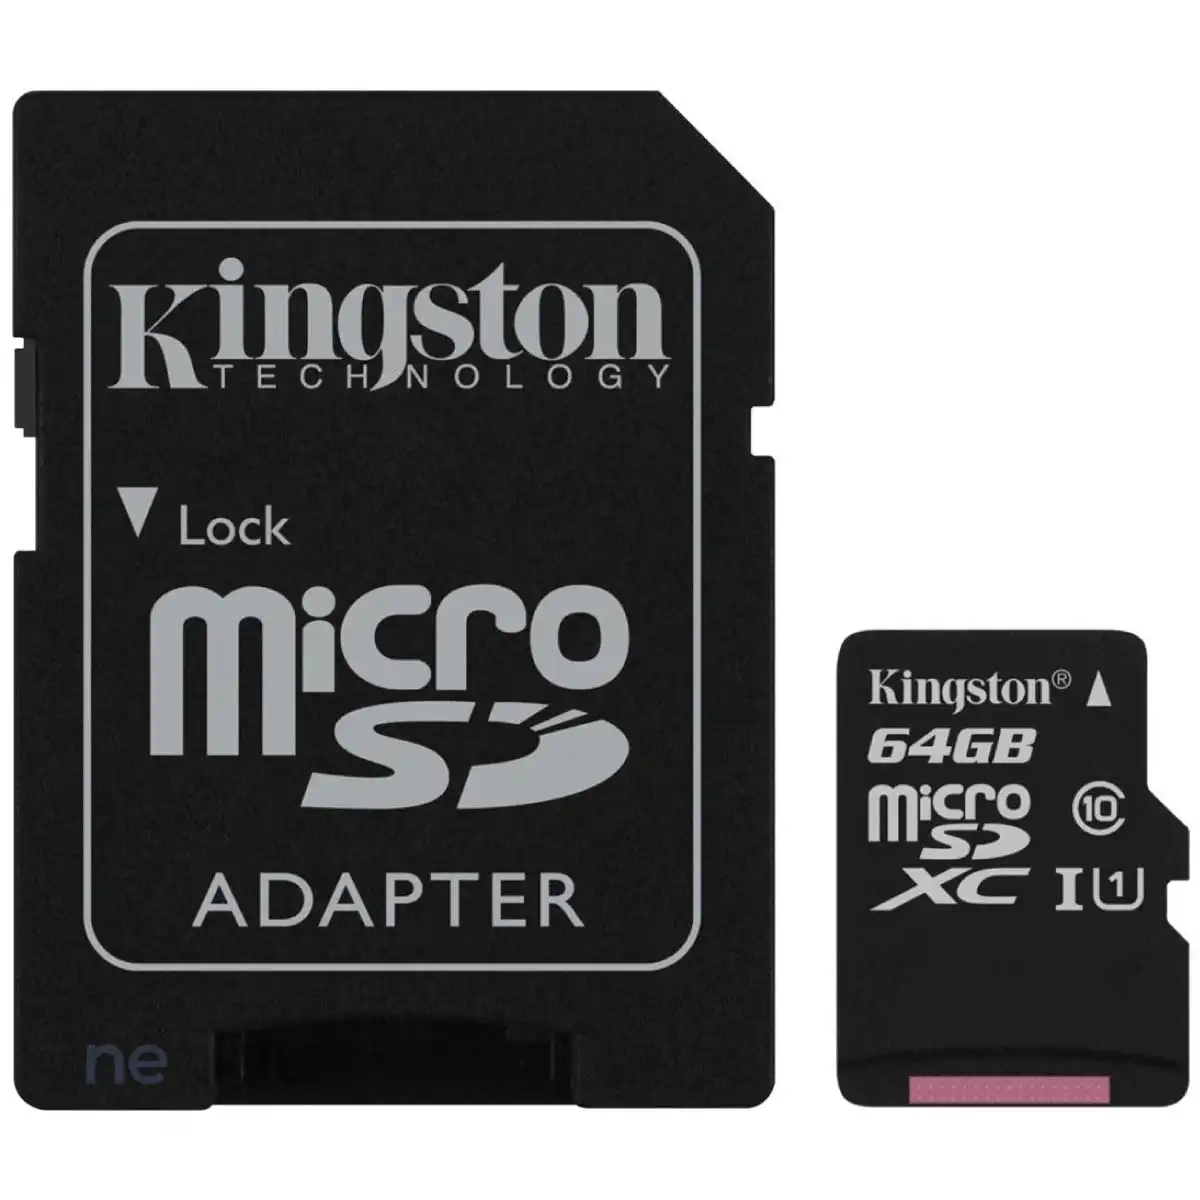 En İyi Micro SD Kart